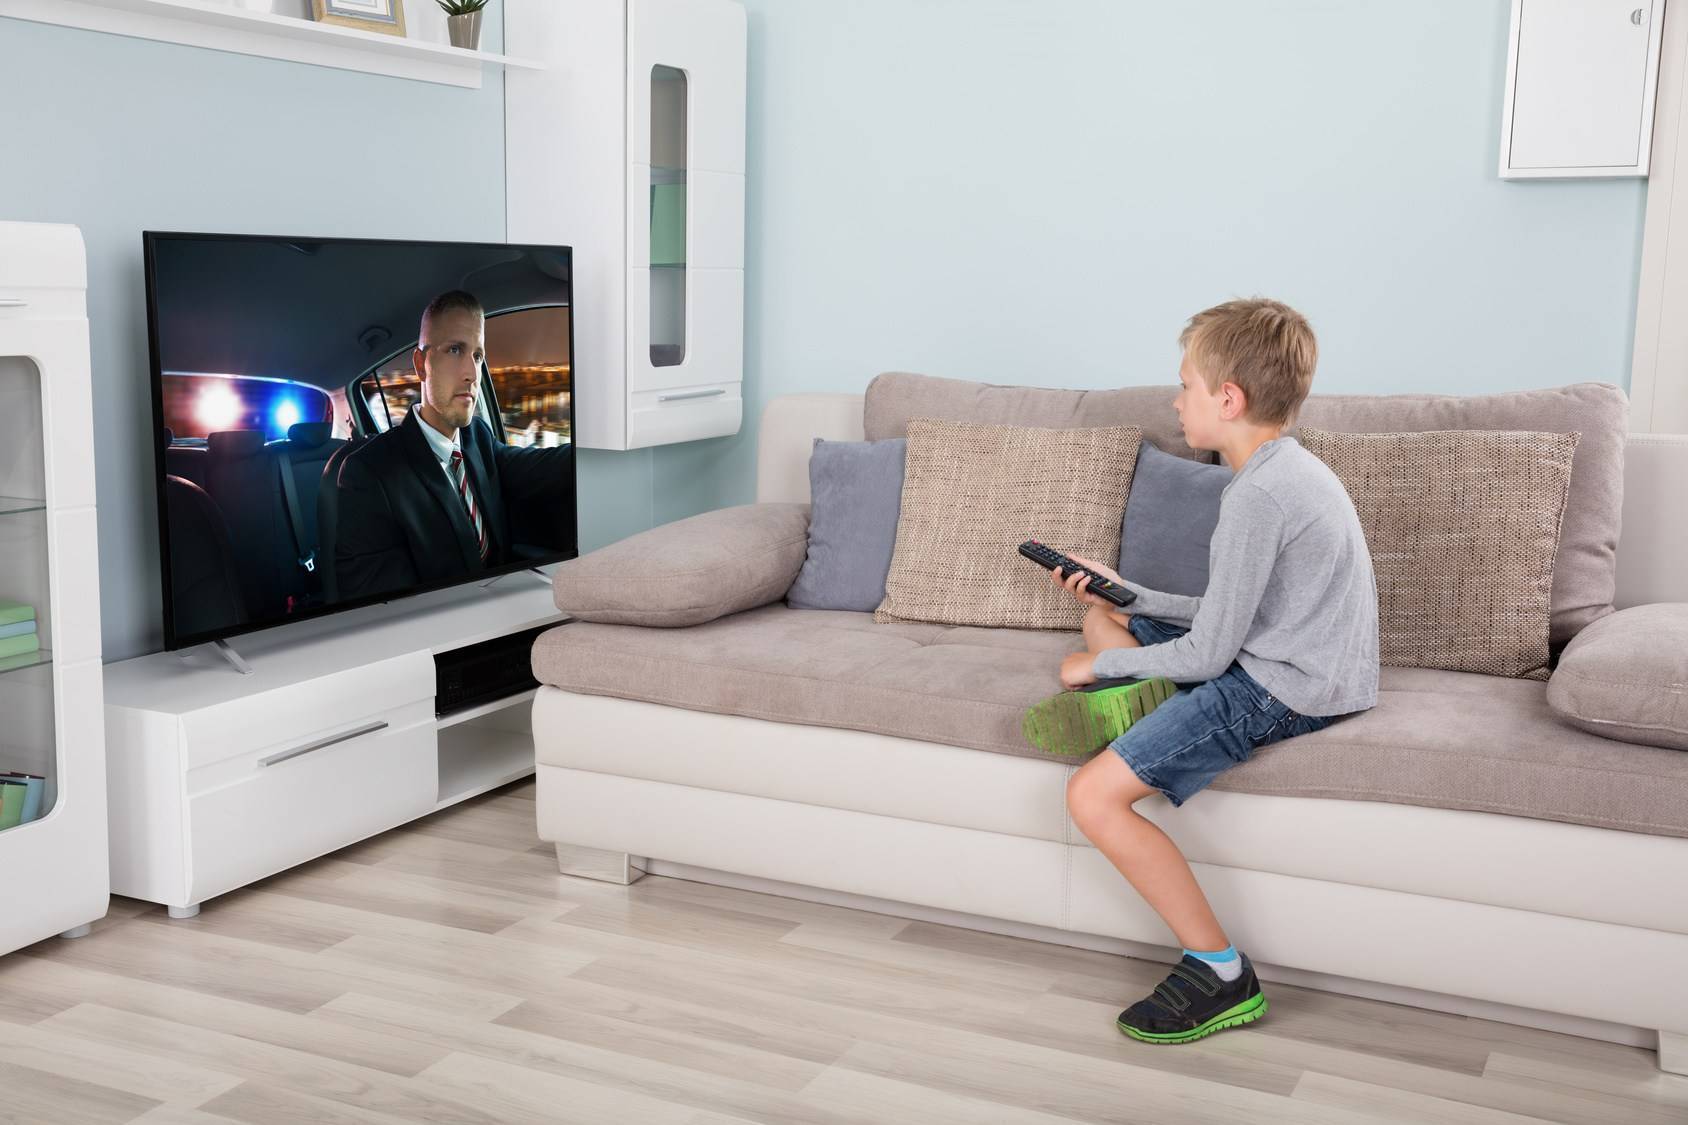 Kids Watching Tv In Living Room